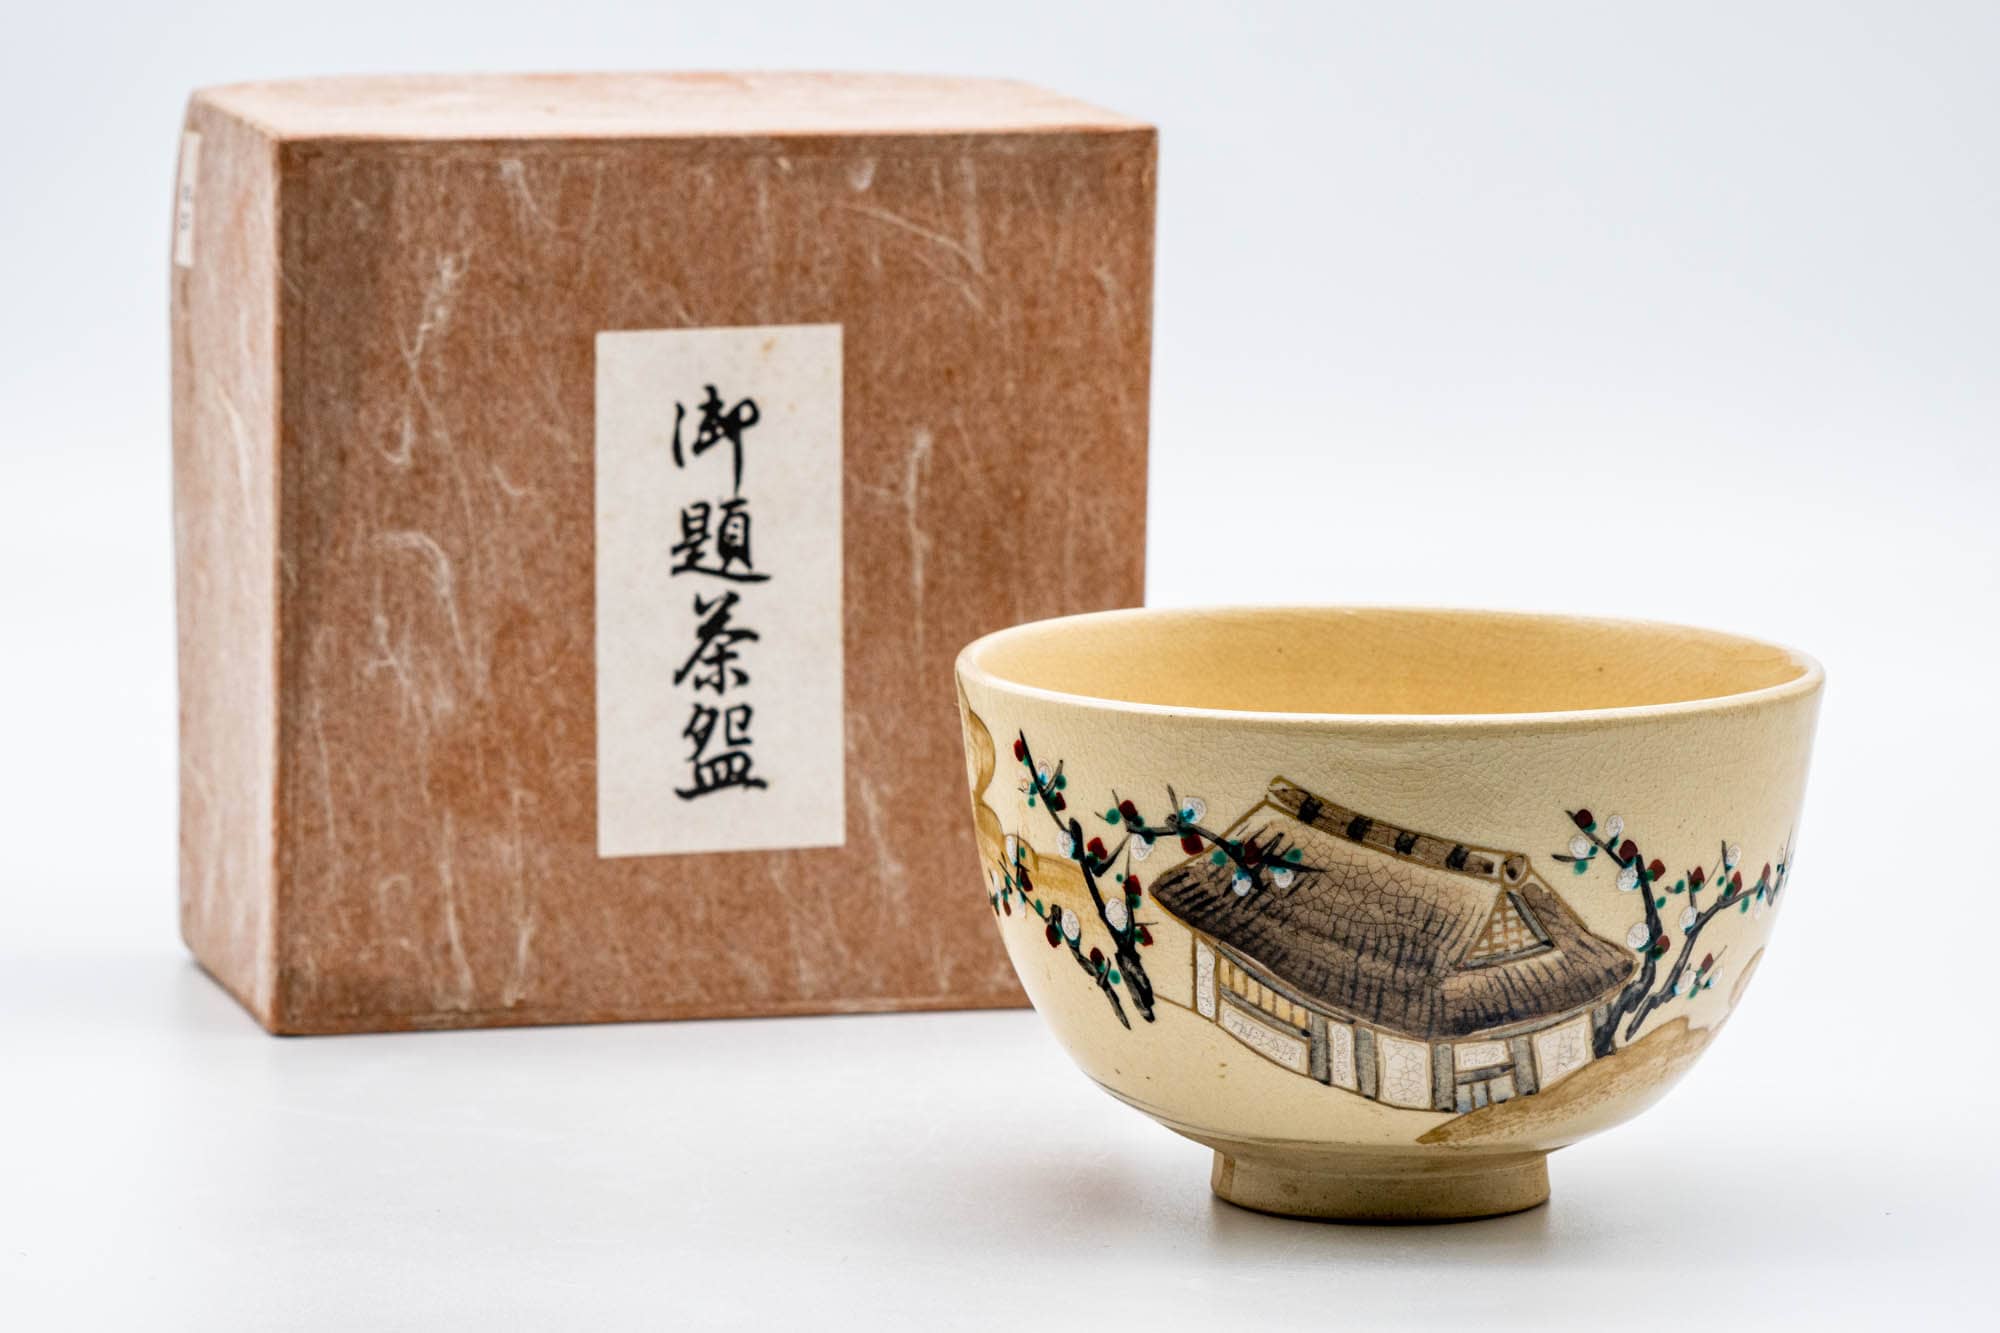 Japanese Matcha Bowl - Thatched Roof House Landscape Kyo-yaki Chawan - 250ml